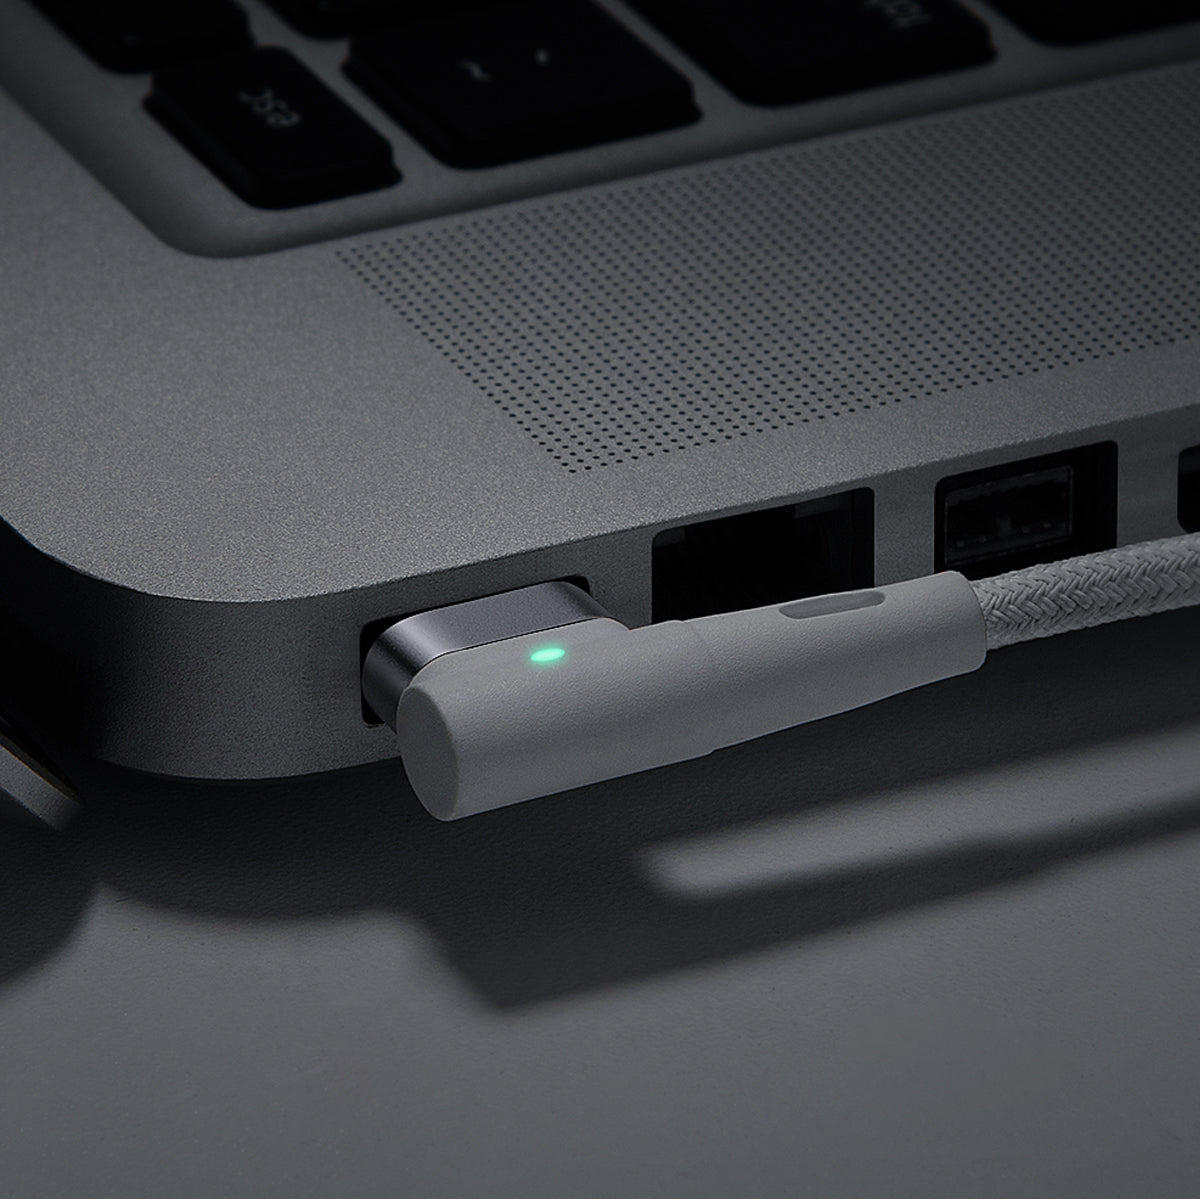 Baseus Zinc Magnetic Series Macbook Laptop Charging Cable C To Macbook 60W 2M White (CATXC-W02)